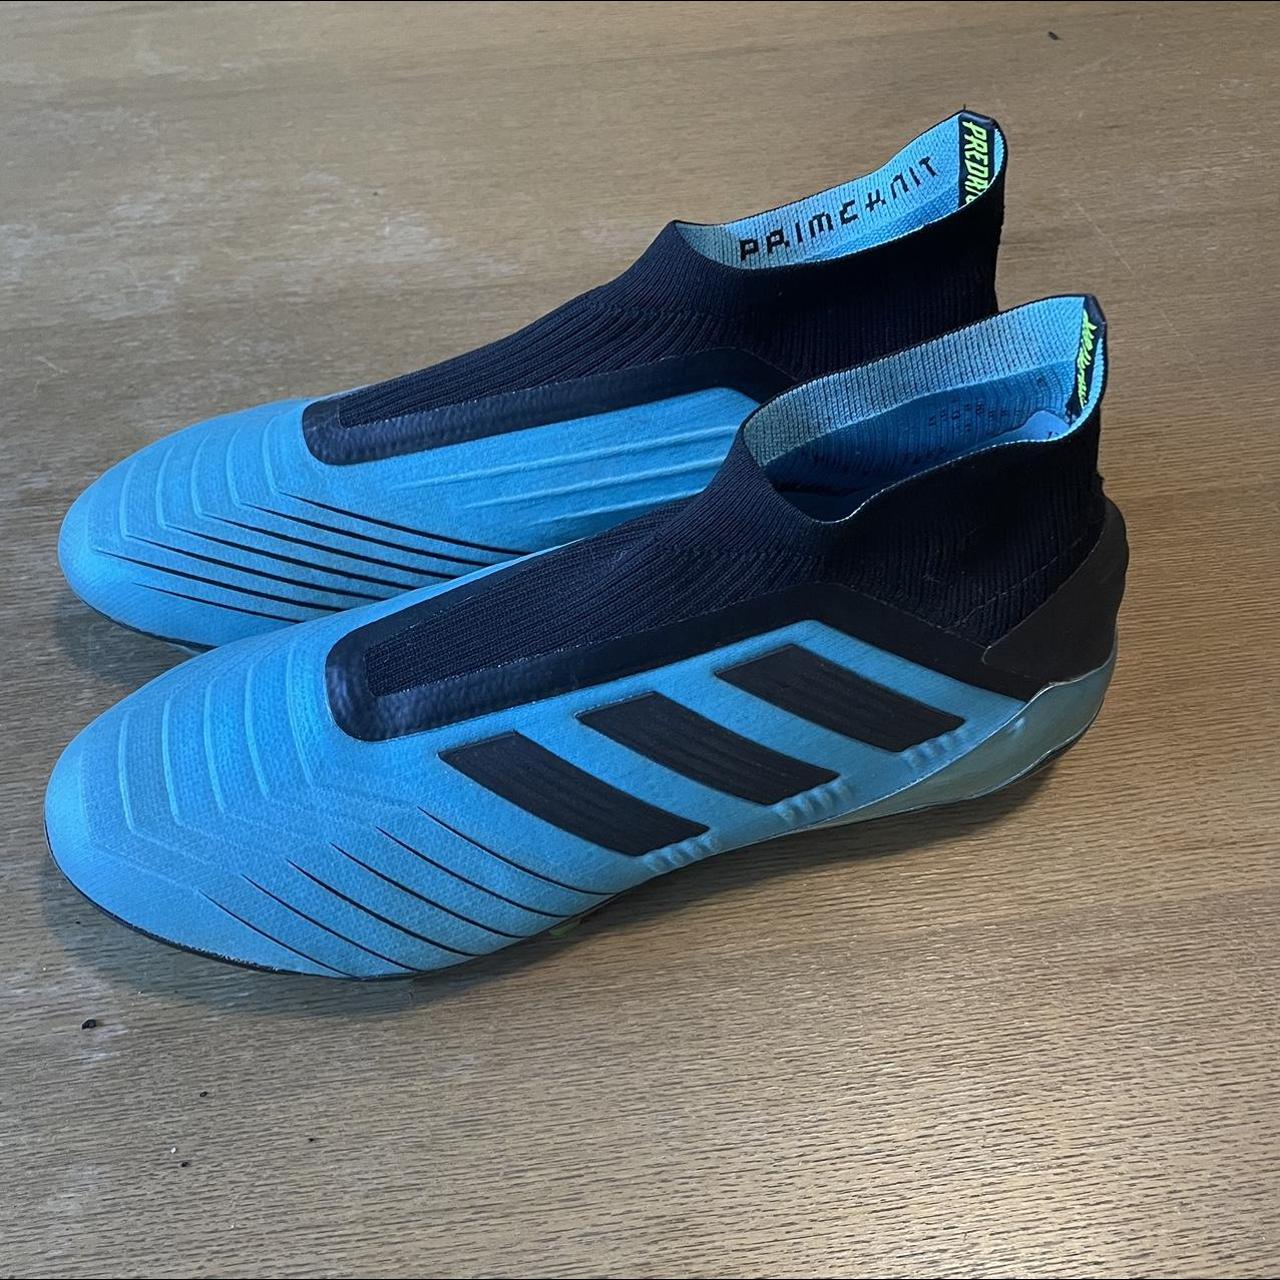 Product Image 1 - adidas Predator 18+ football boots
-